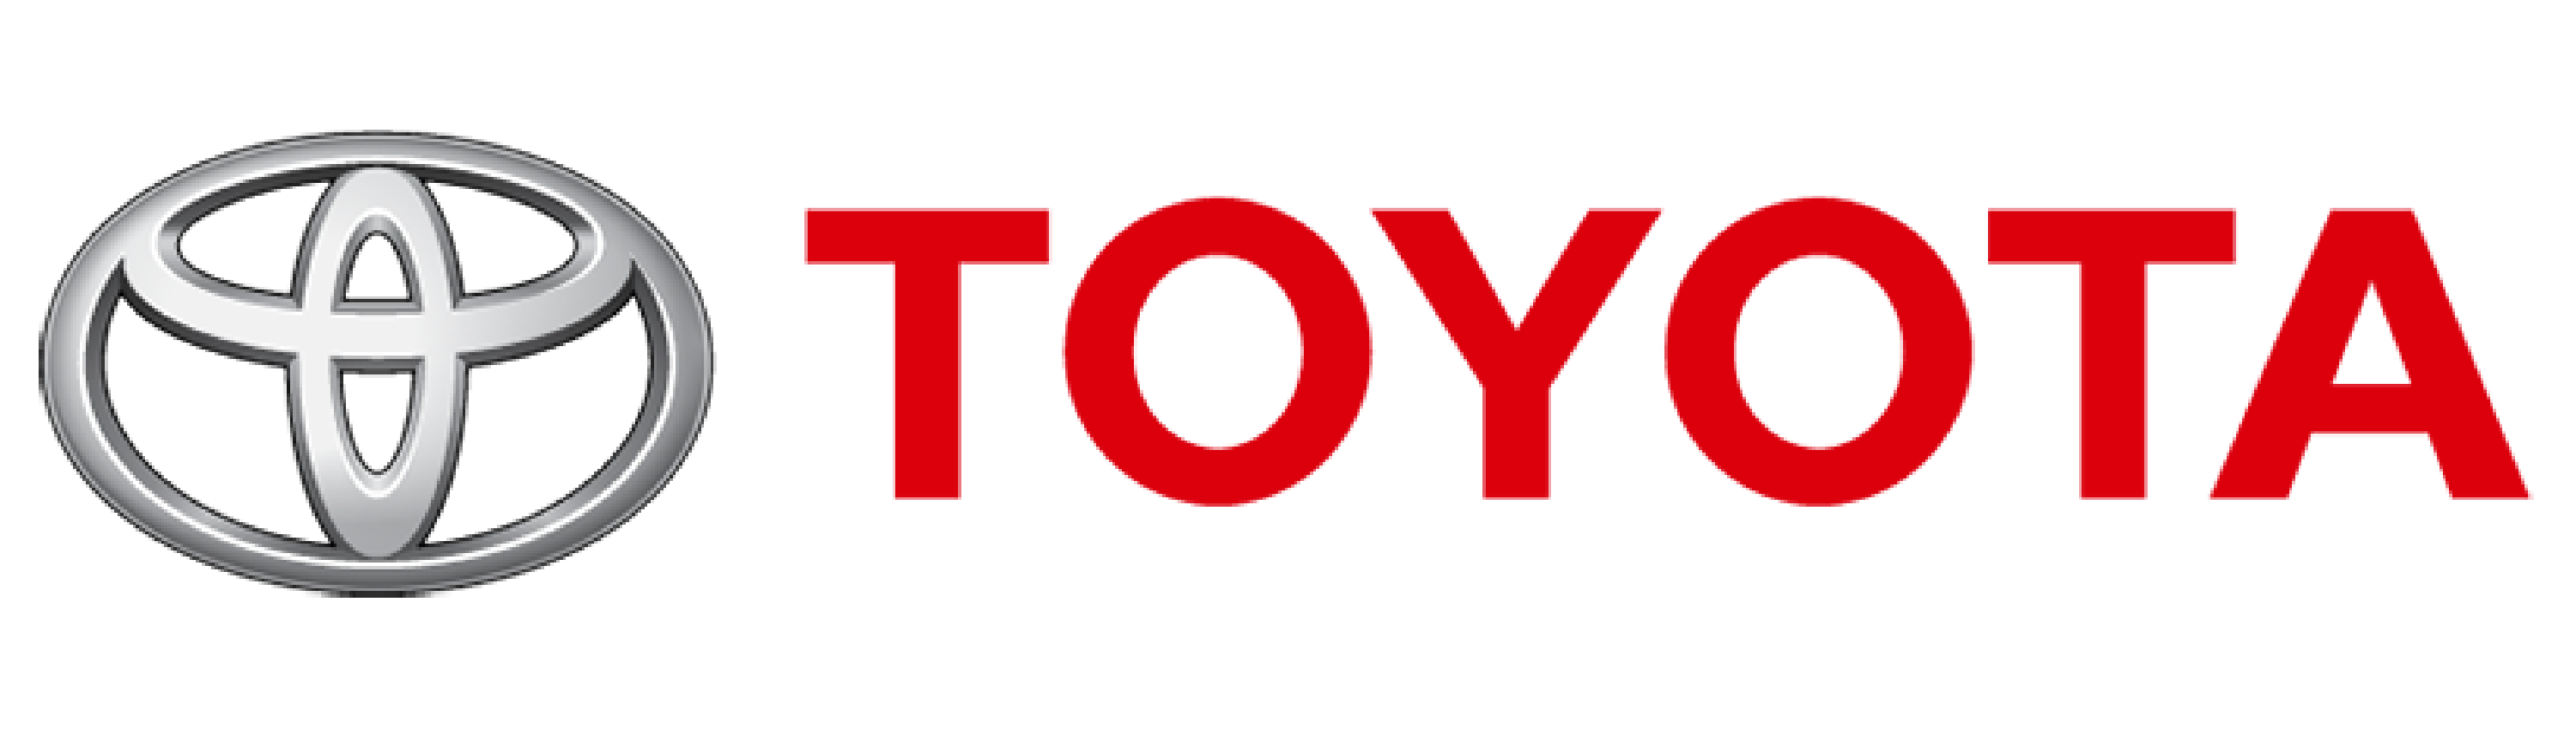 logos clientes_toyota